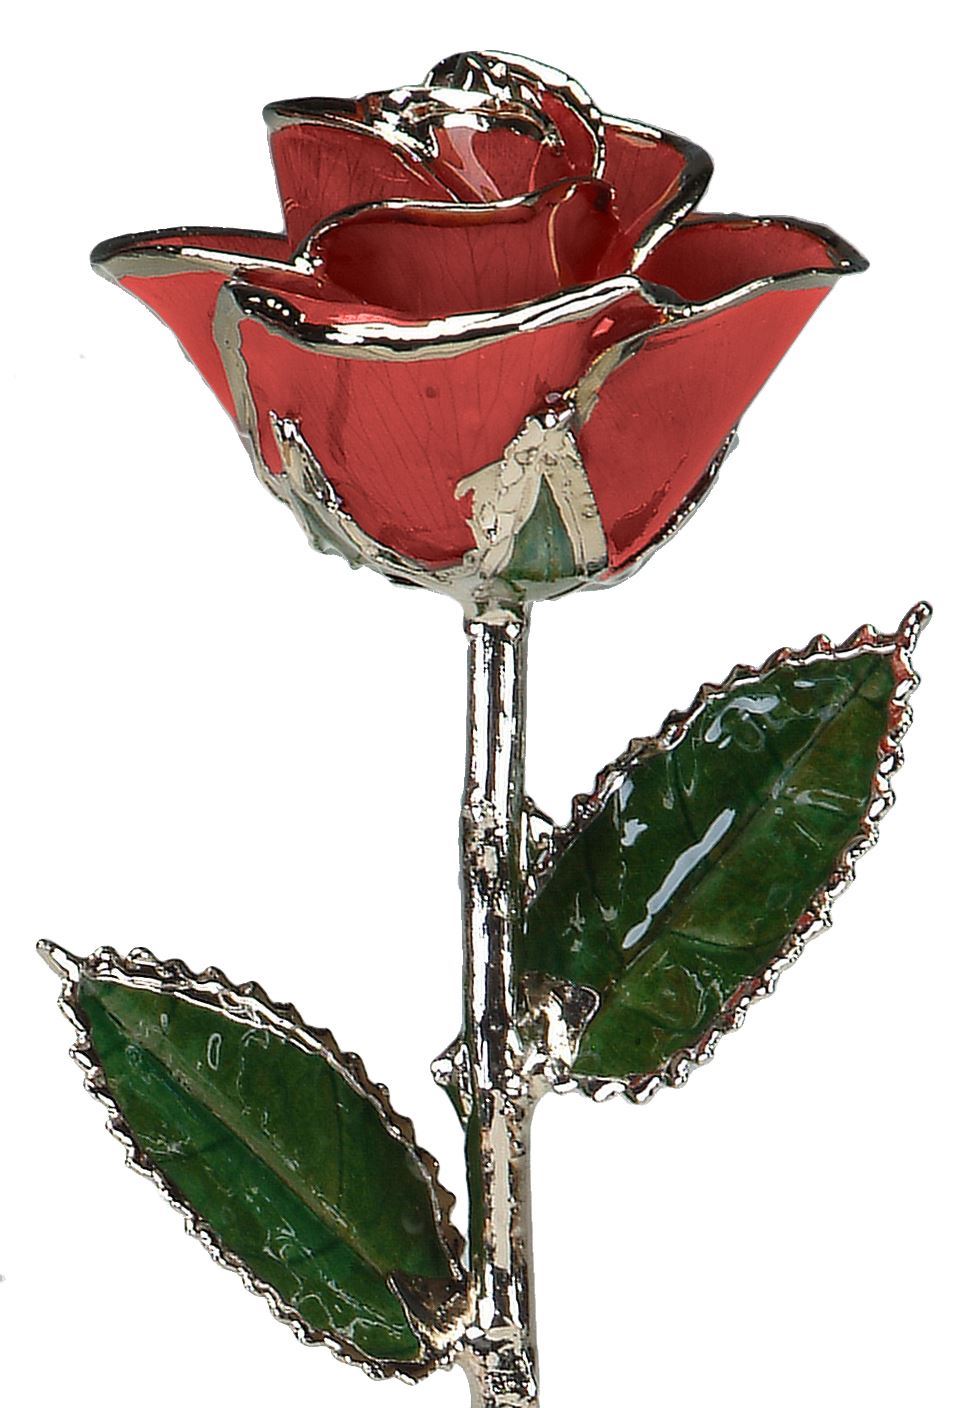 https://www.arthursjewelers.com/content/images/thumbs/Original/platinum-red-rose_1-19362240.jpeg